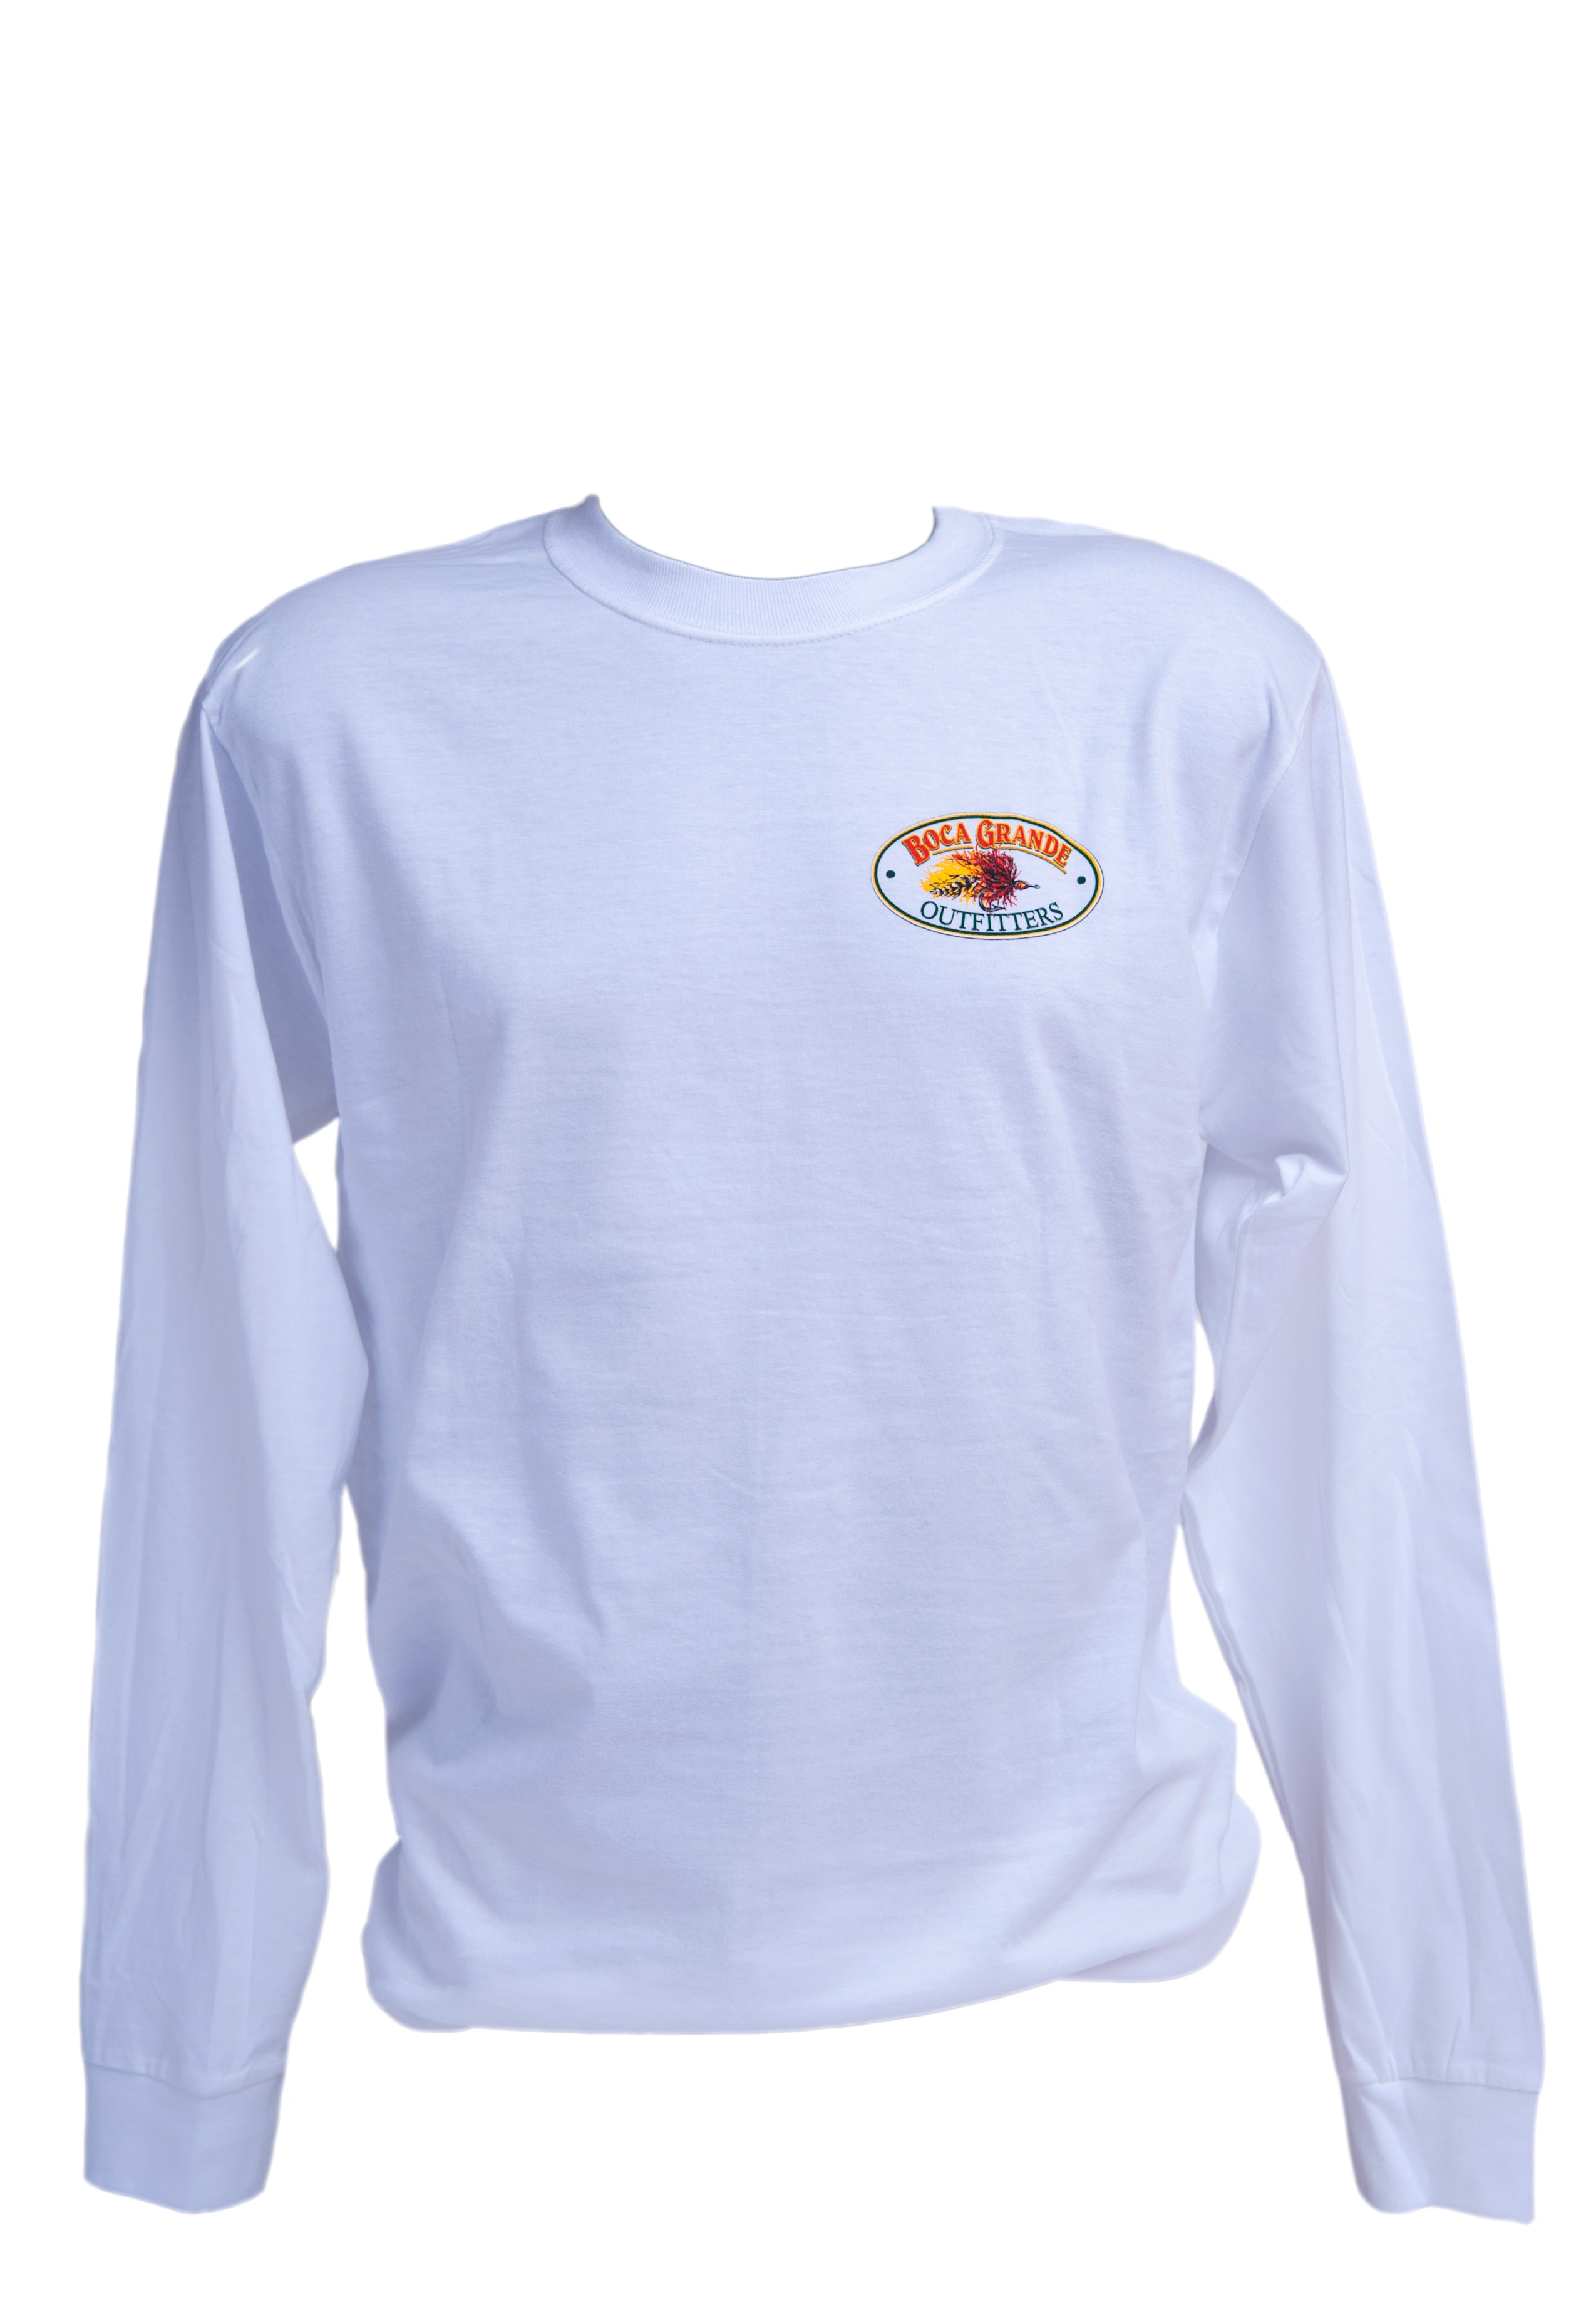 Boca Grande Outfitters Long Sleeved Fly Logo T-Shirt - White